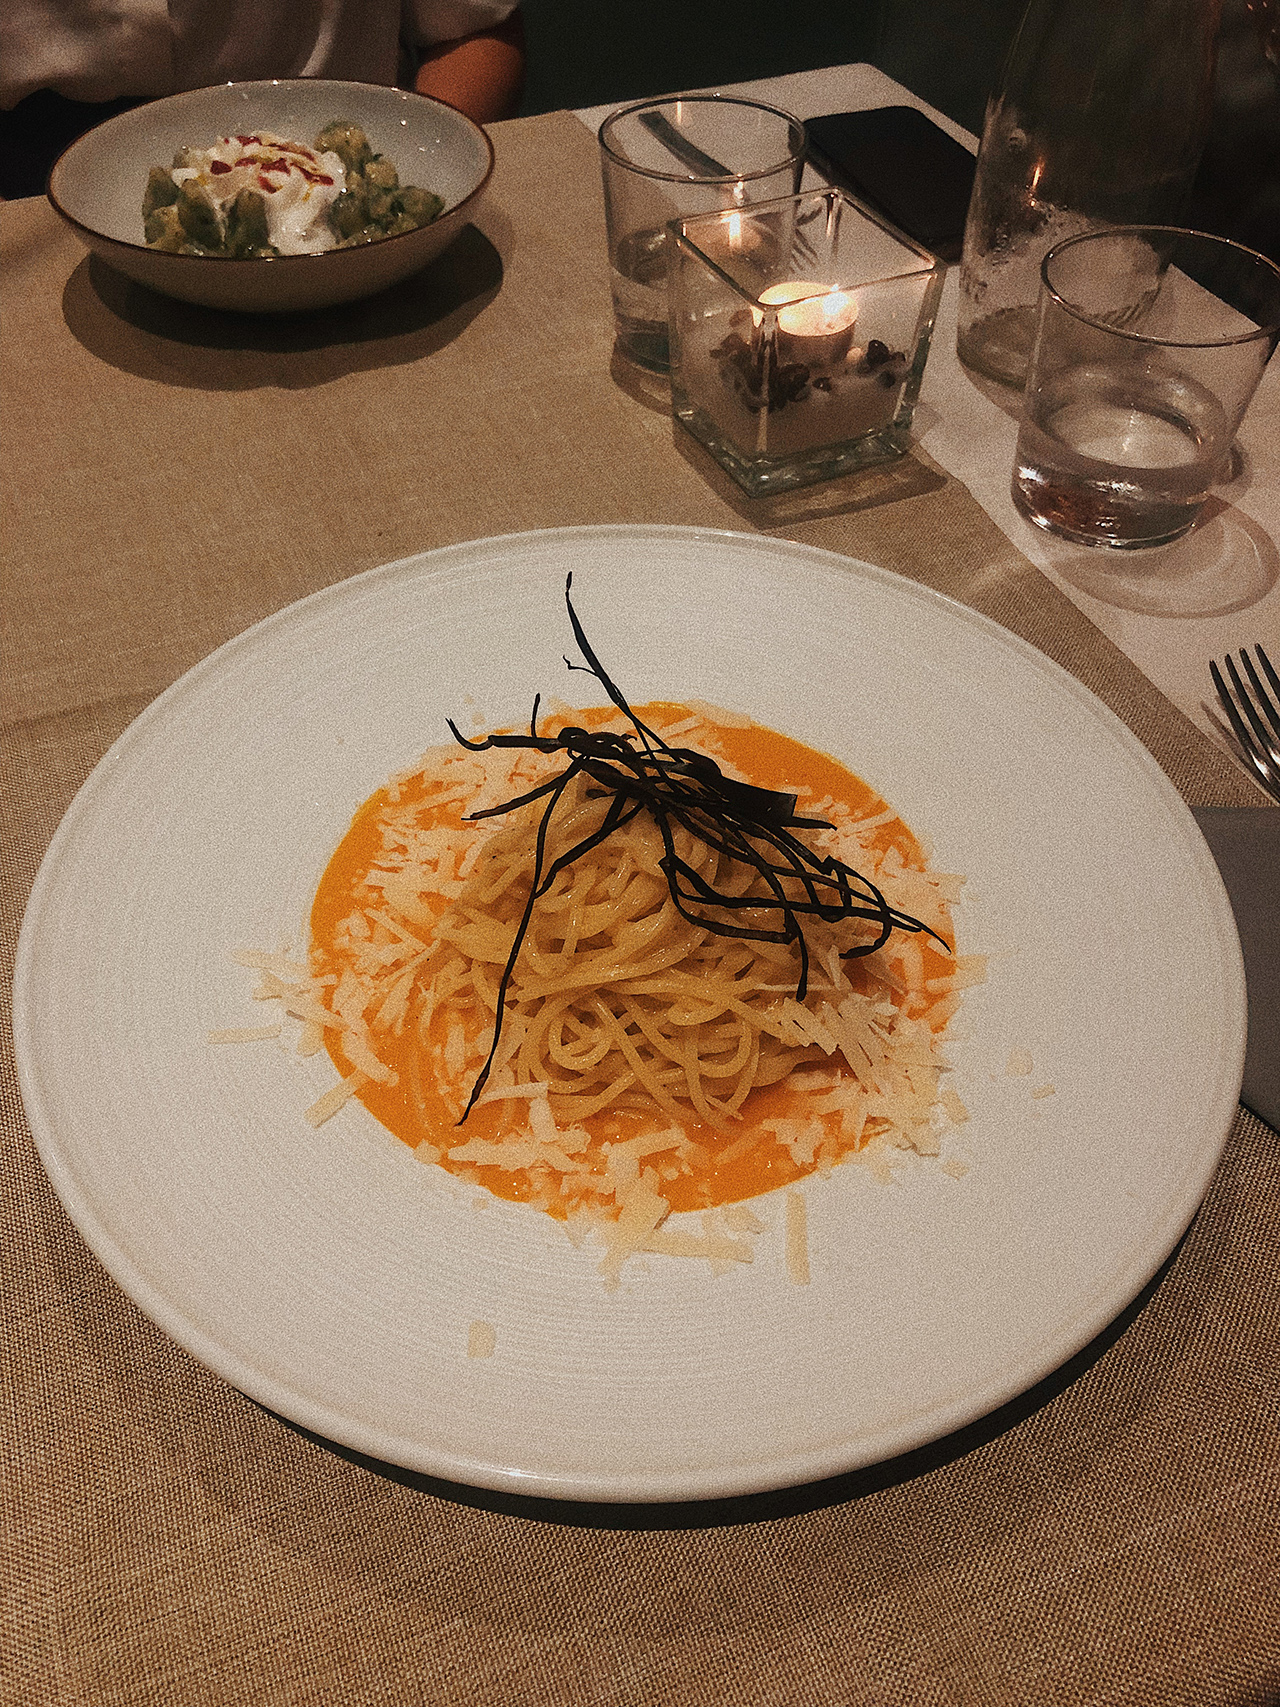 Truffel pasta in Mestre, Venice Italy